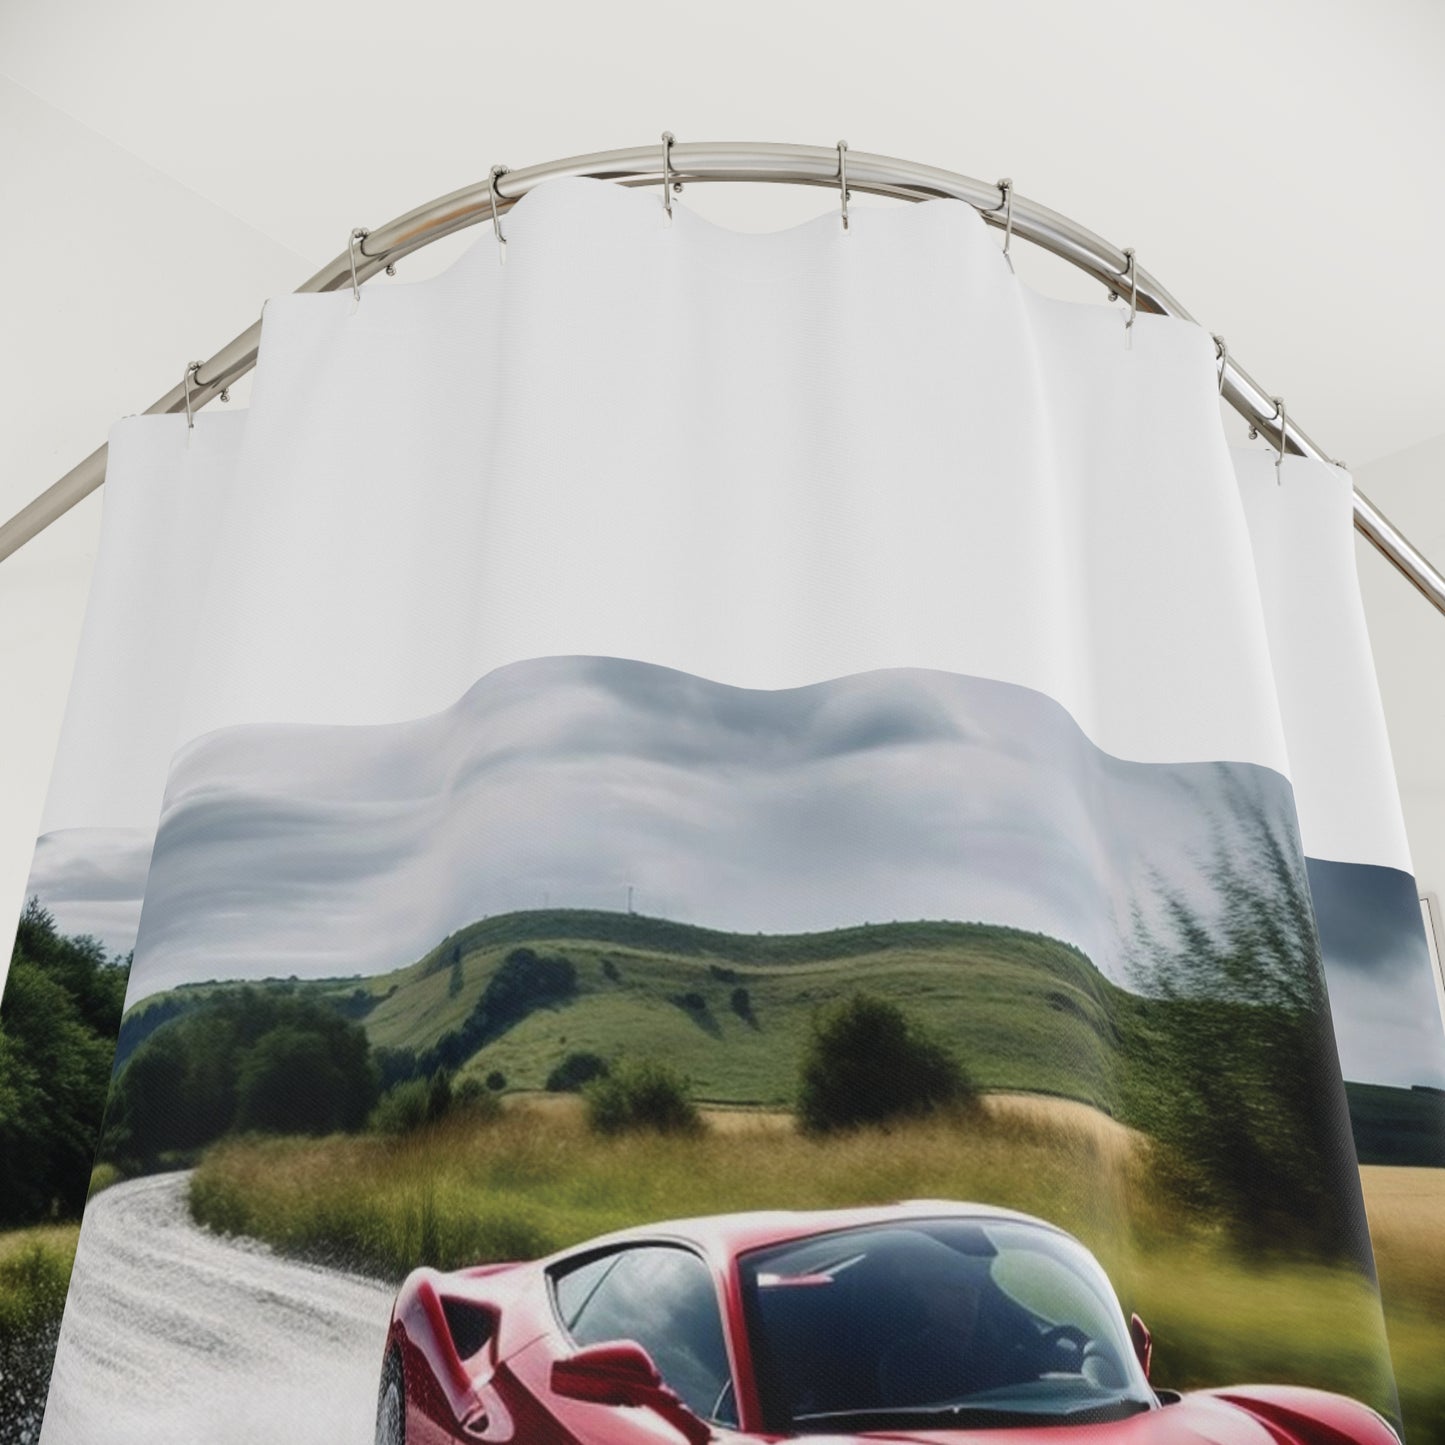 Polyester Shower Curtain Water Ferrari Splash 4